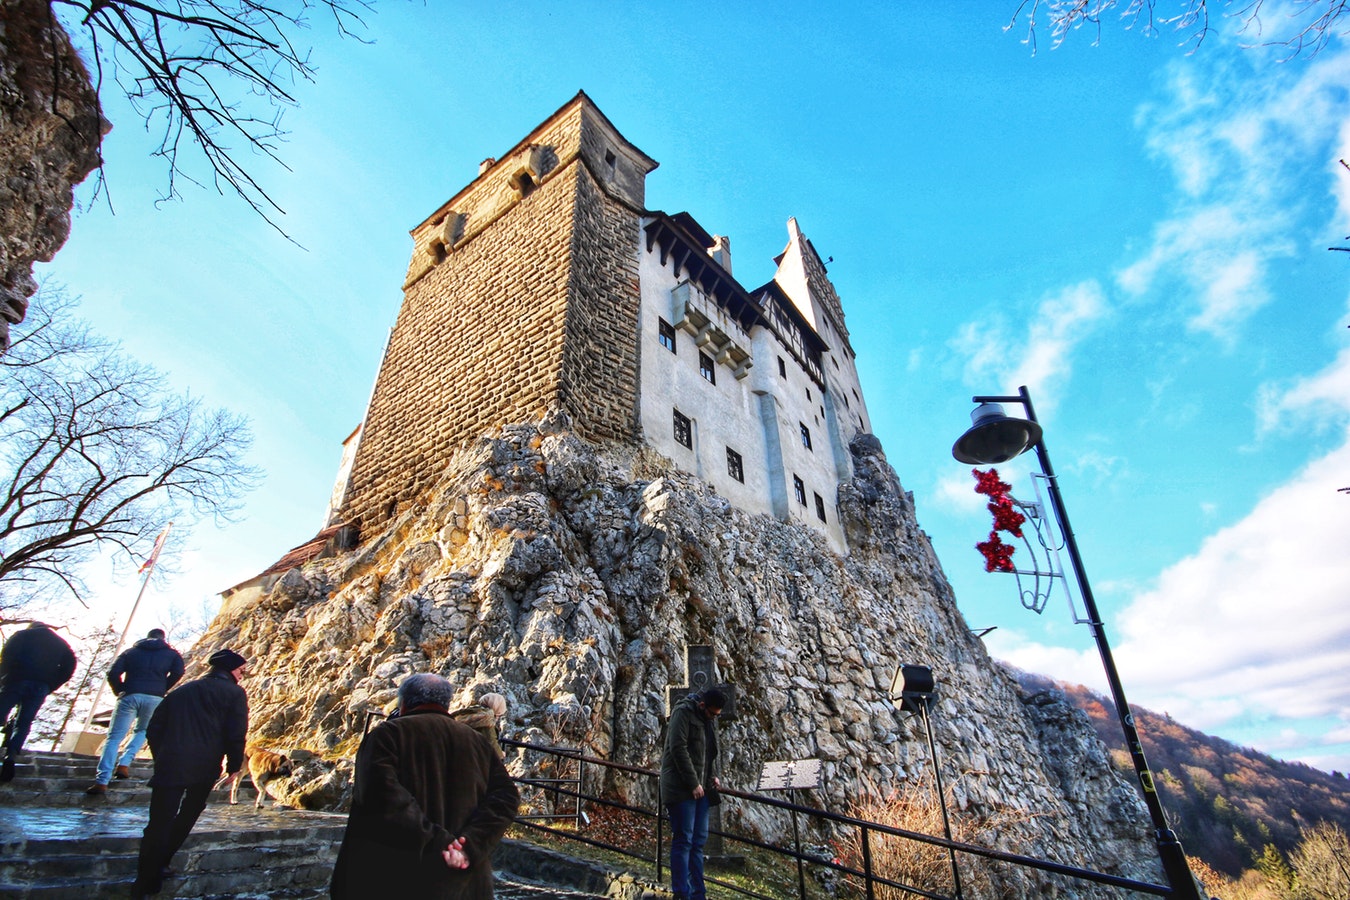 Scariest Tour in Romania: Exploring Dracula’s Castle